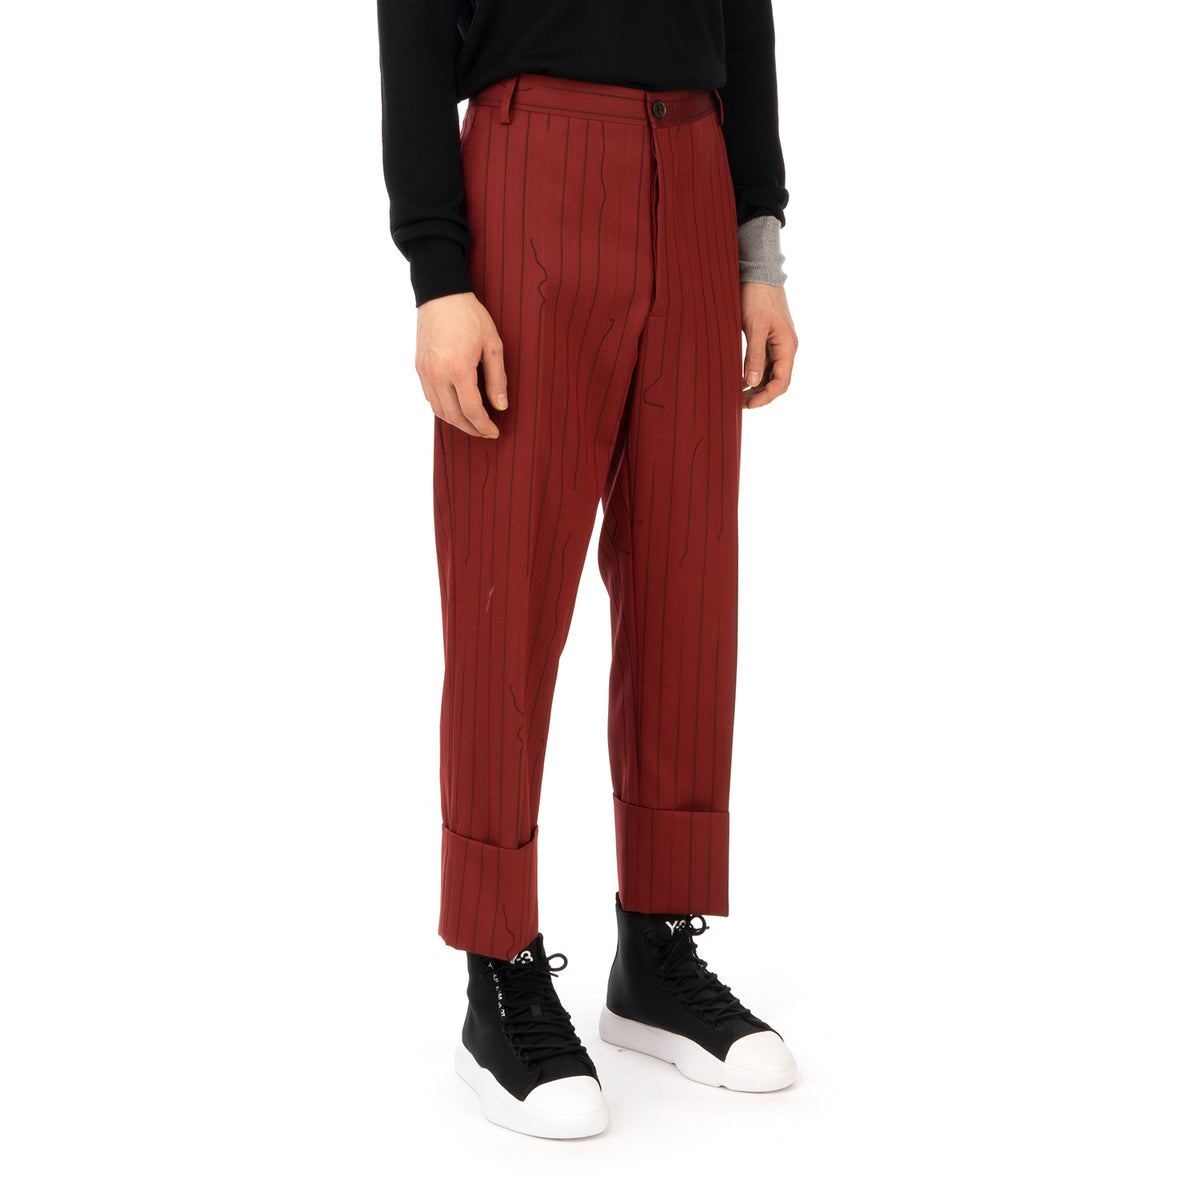 Vivienne Westwood | Cropped George Trousers Red - Broken Pinstripe - Concrete